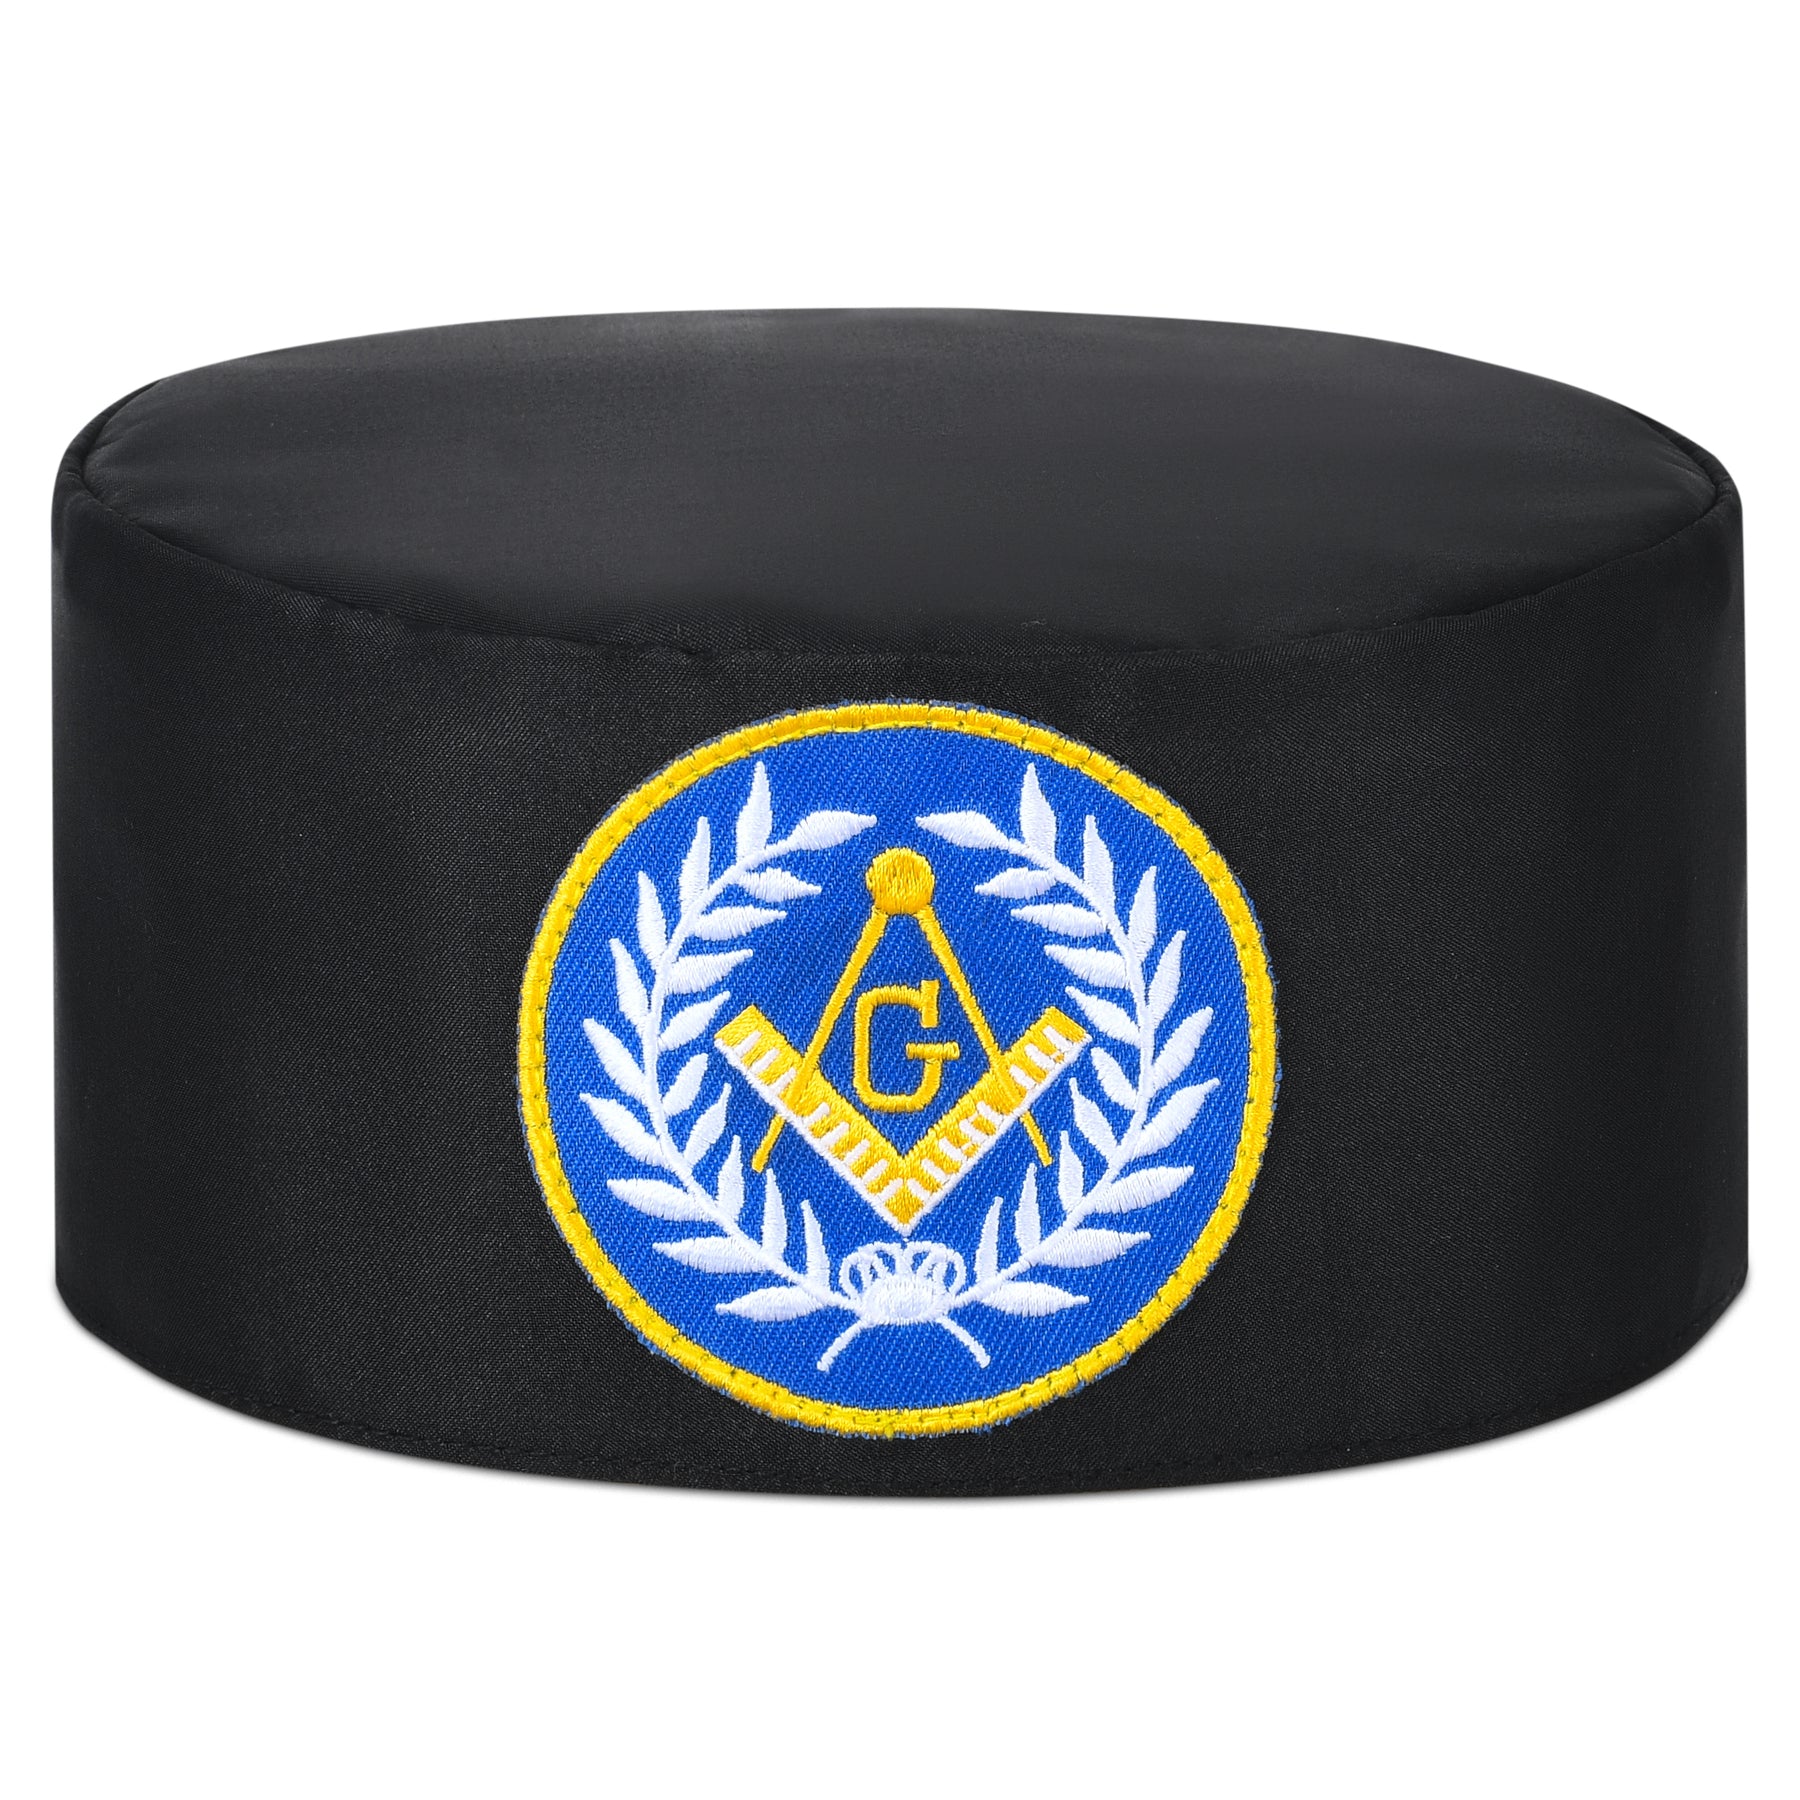 Master Mason Blue Lodge Crown Cap - Black With Blue Emblem & Wreath - Bricks Masons